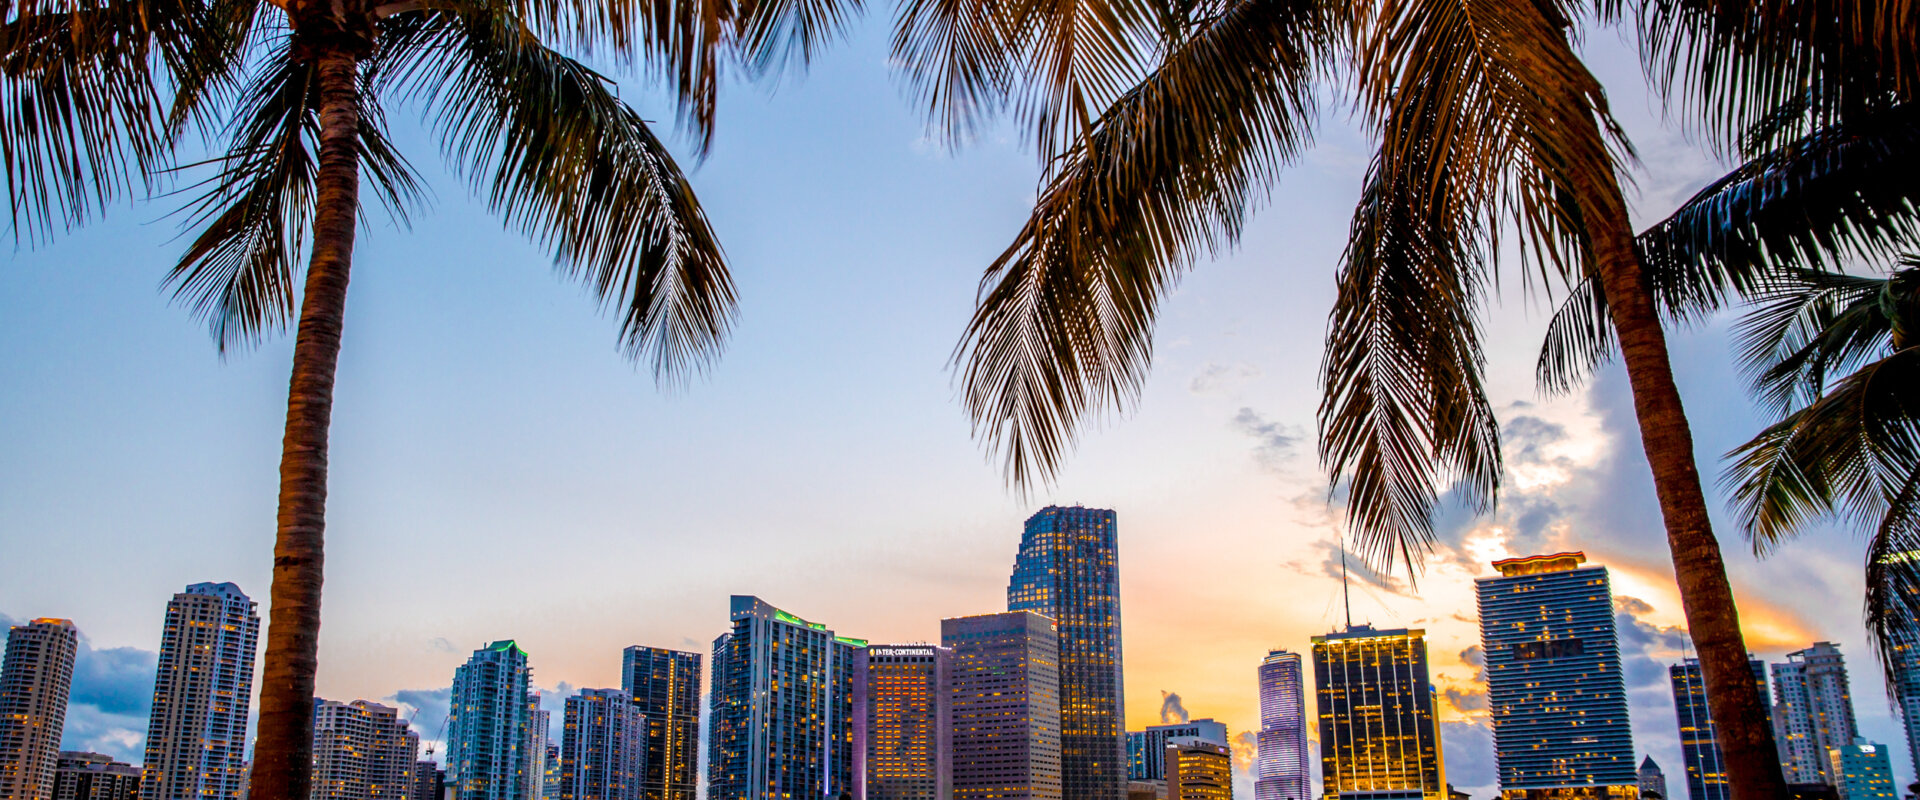 Miami FL Wholesale Real Estate Deals | Reivesti